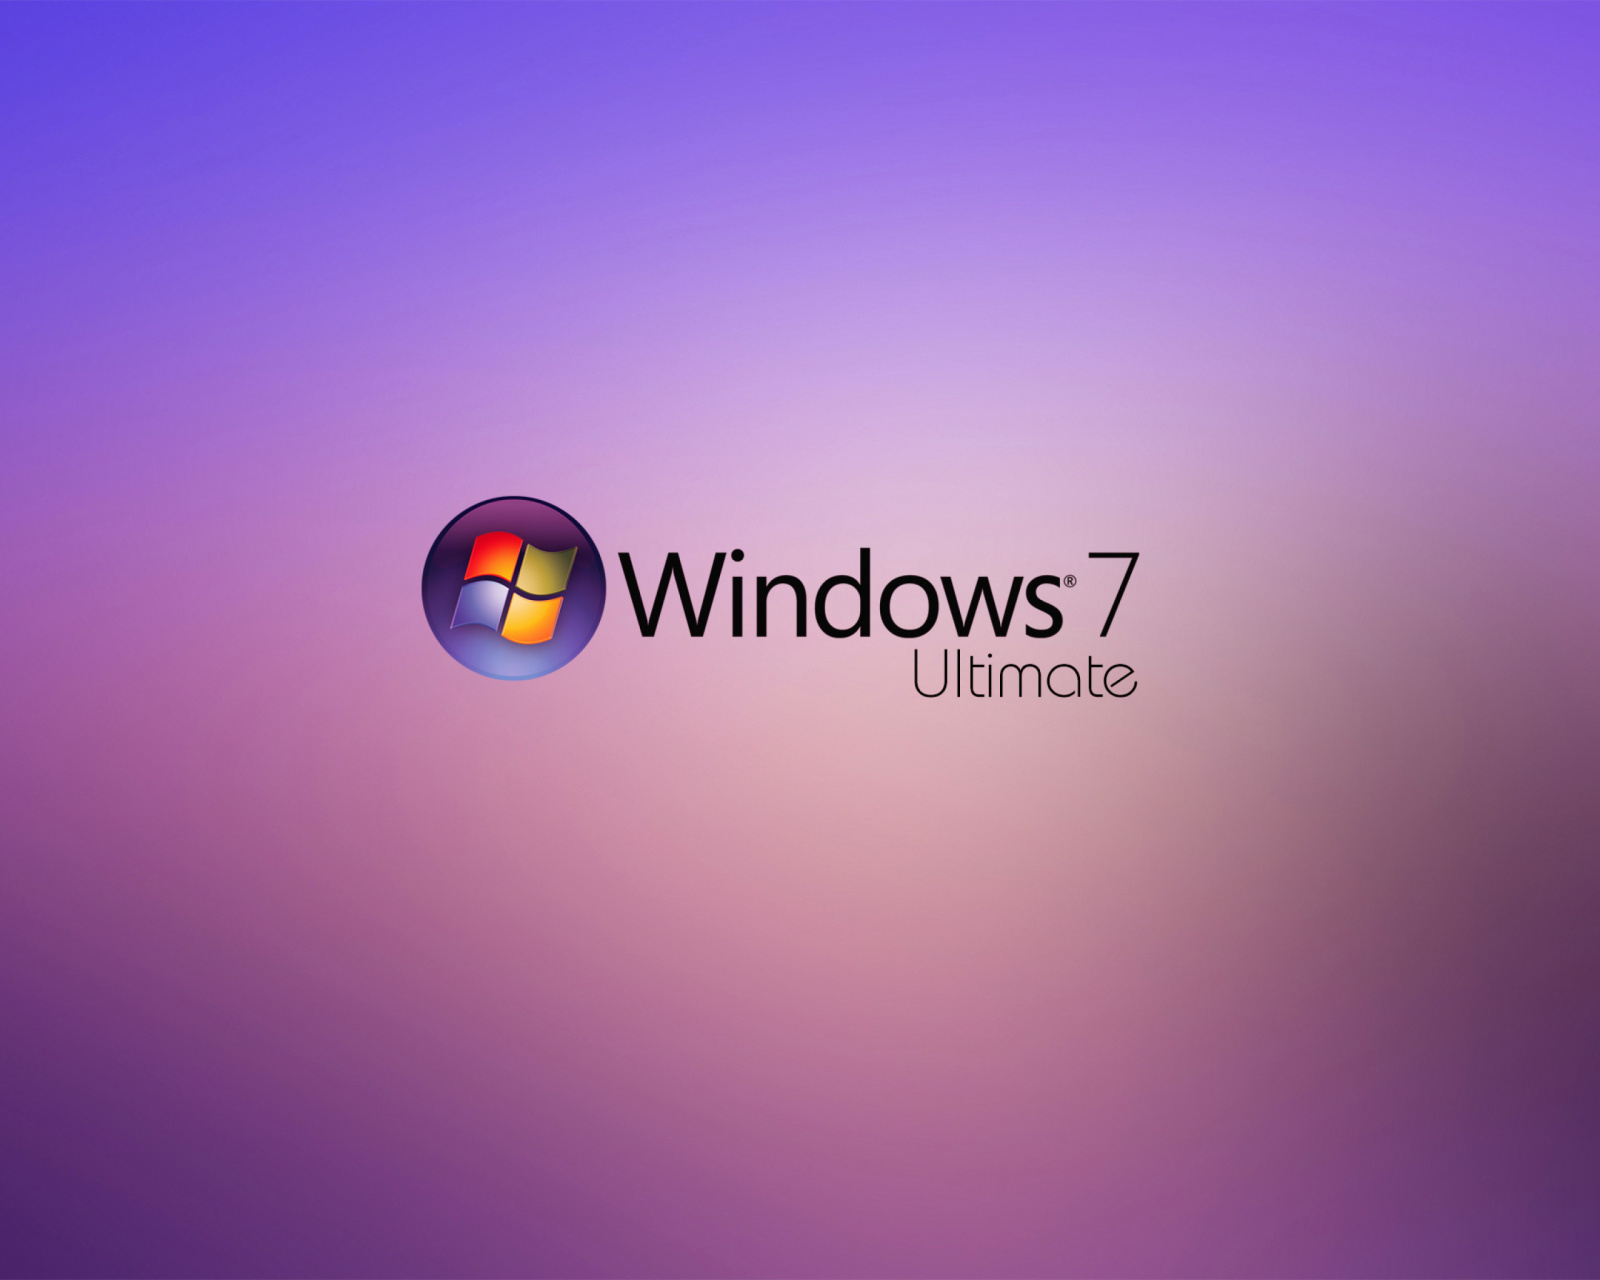 Windows 7 Ultimate wallpaper 1600x1280